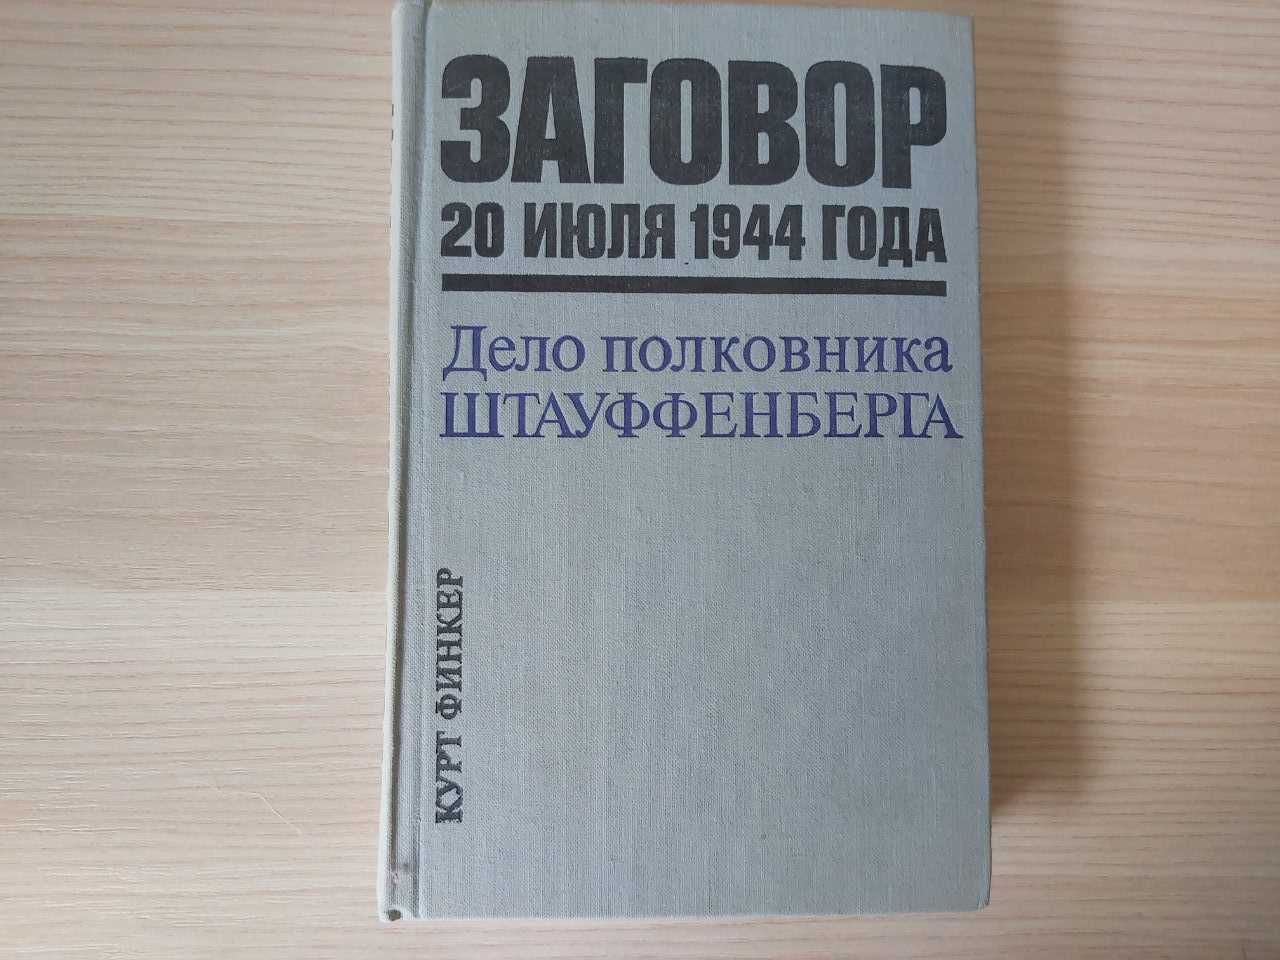 Книга Крут Финкер "Заговор"